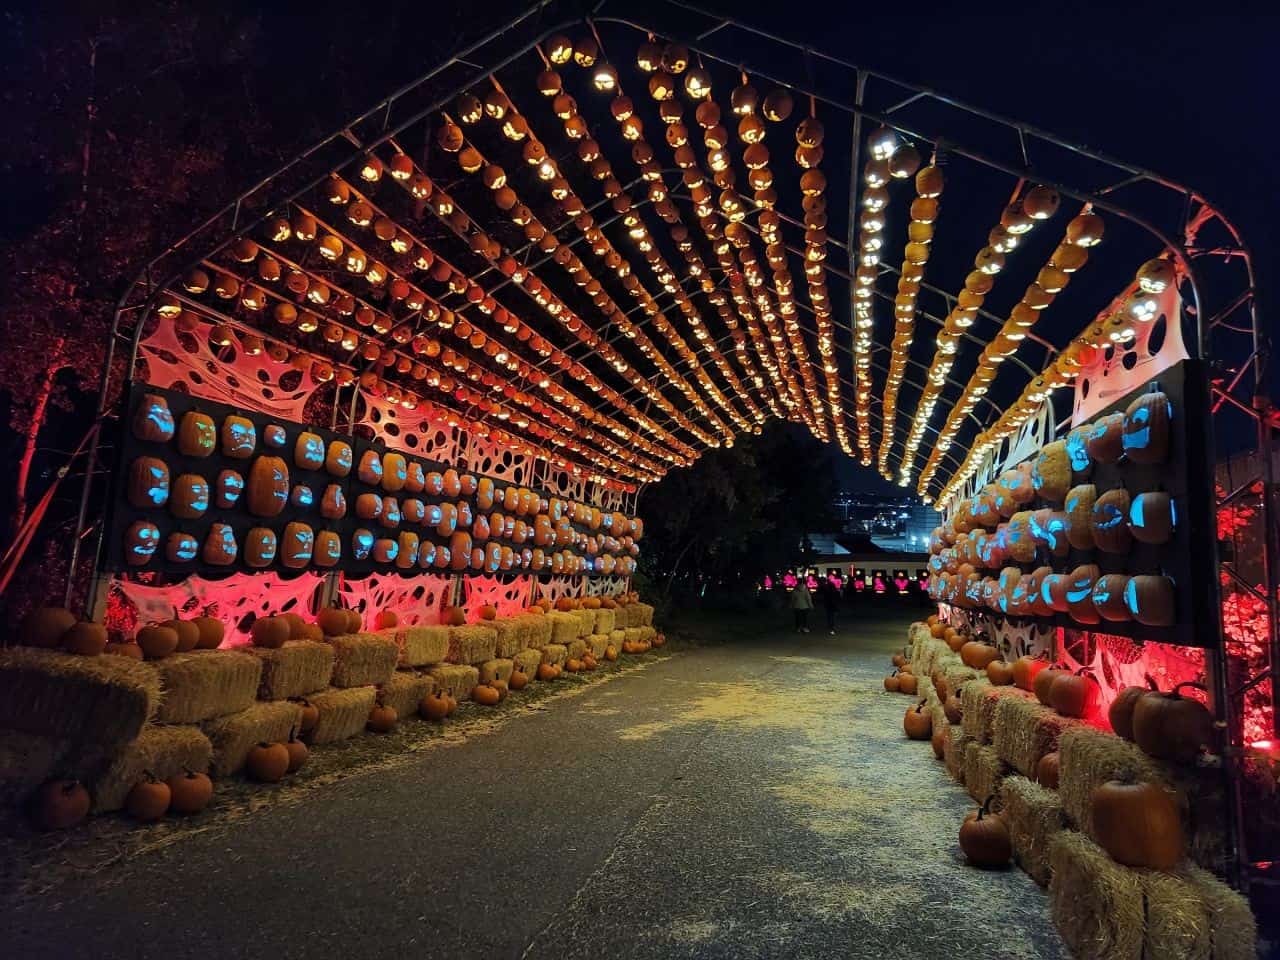 Popular Pumpkin tunnel at Pumpkins After Dark in Calgary Alberta Canada